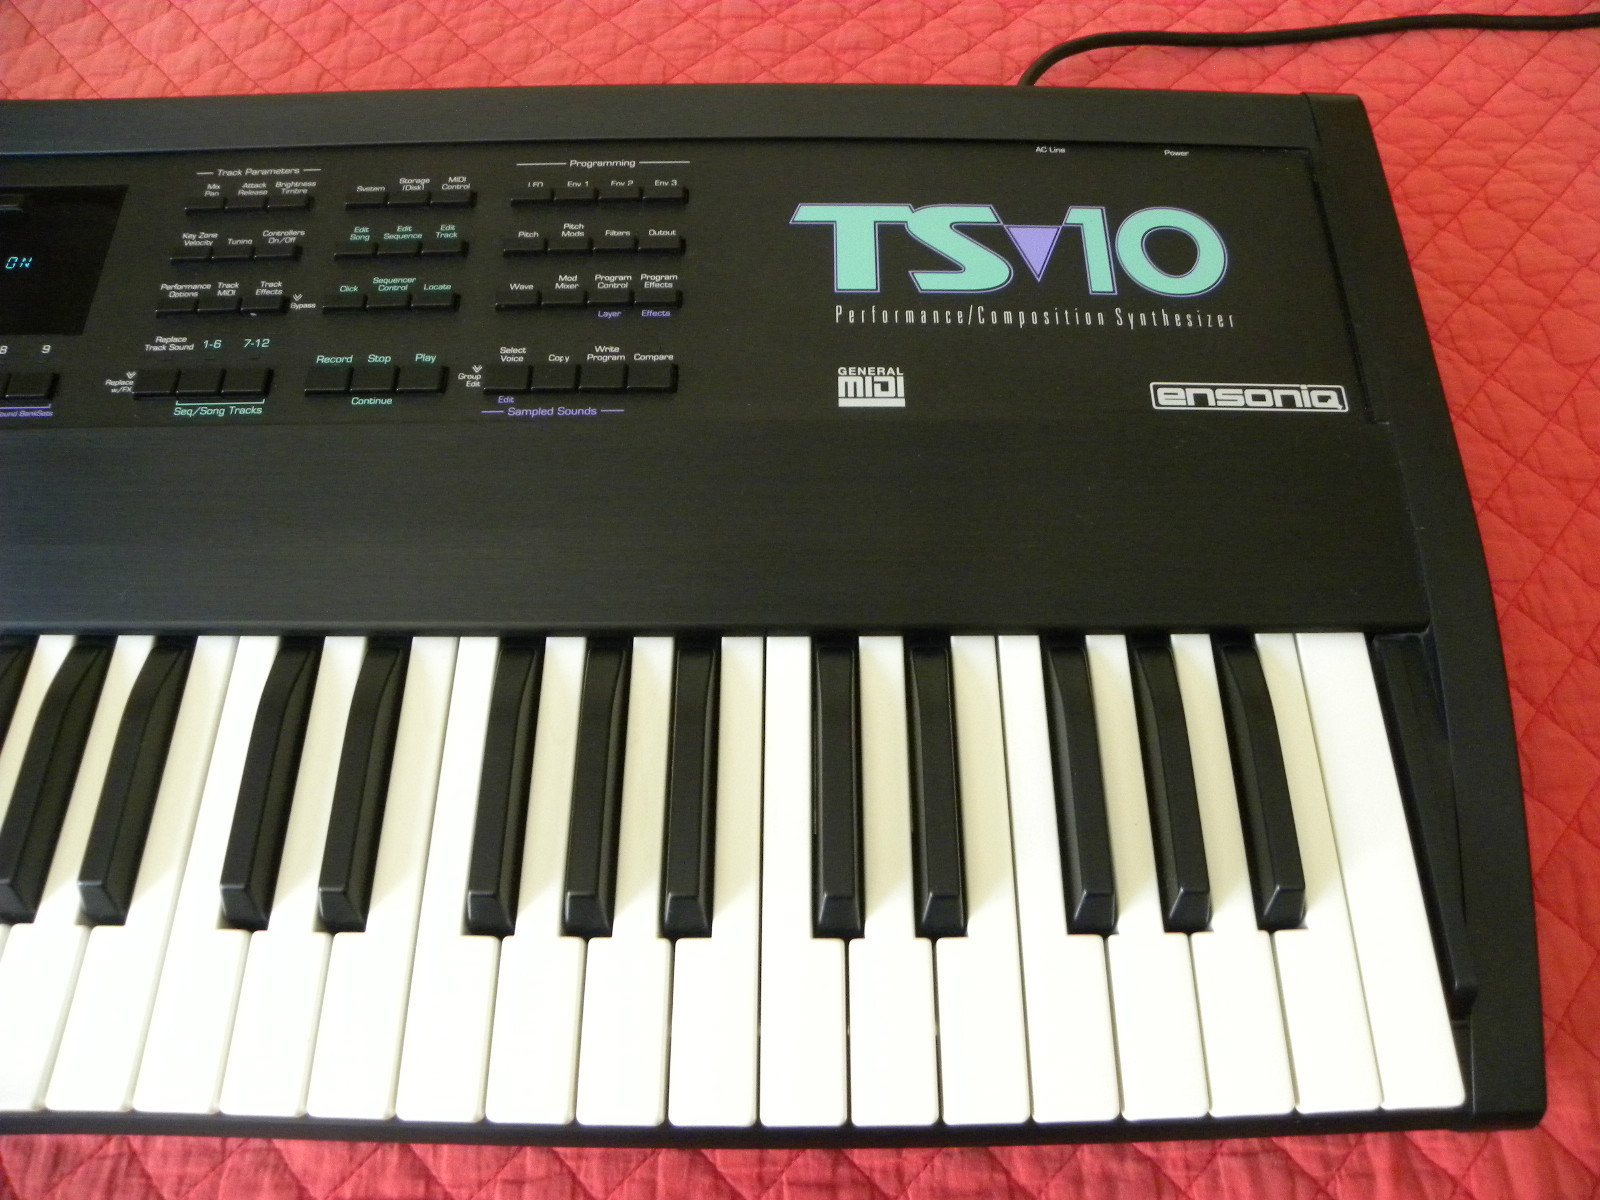 Ensoniq TS-10 Performance / Composition Synthesizer.